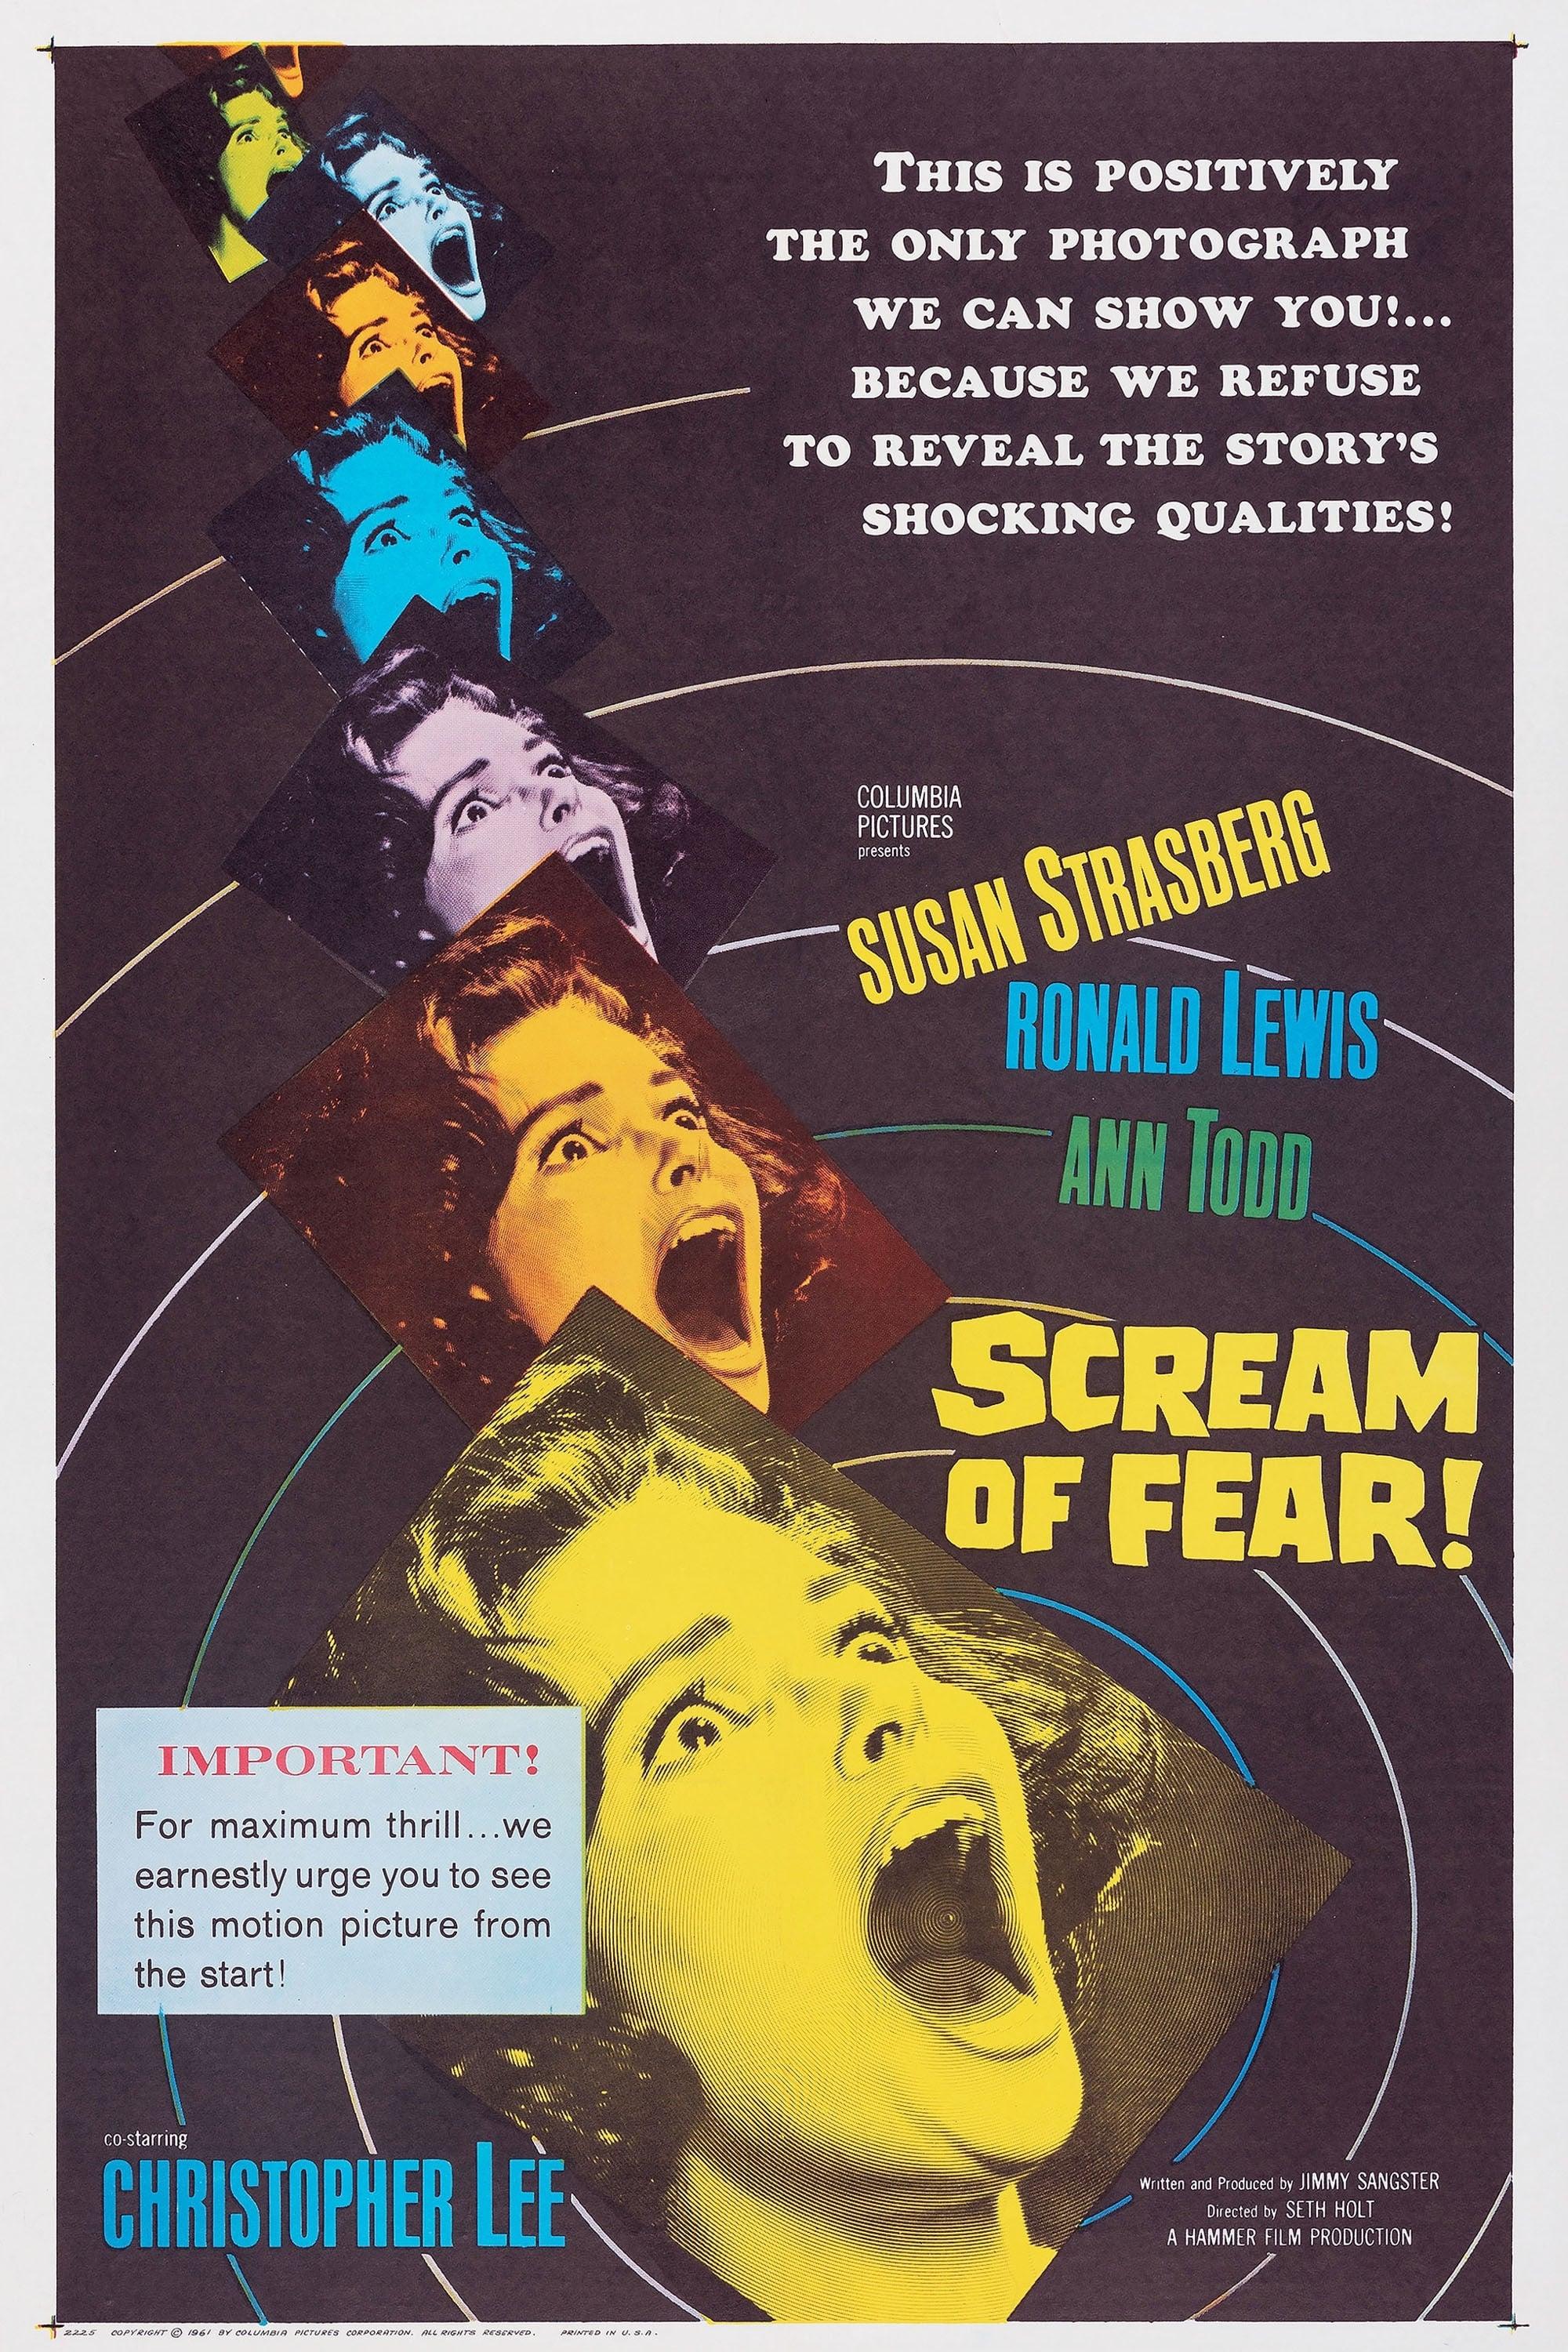 Taste of Fear poster